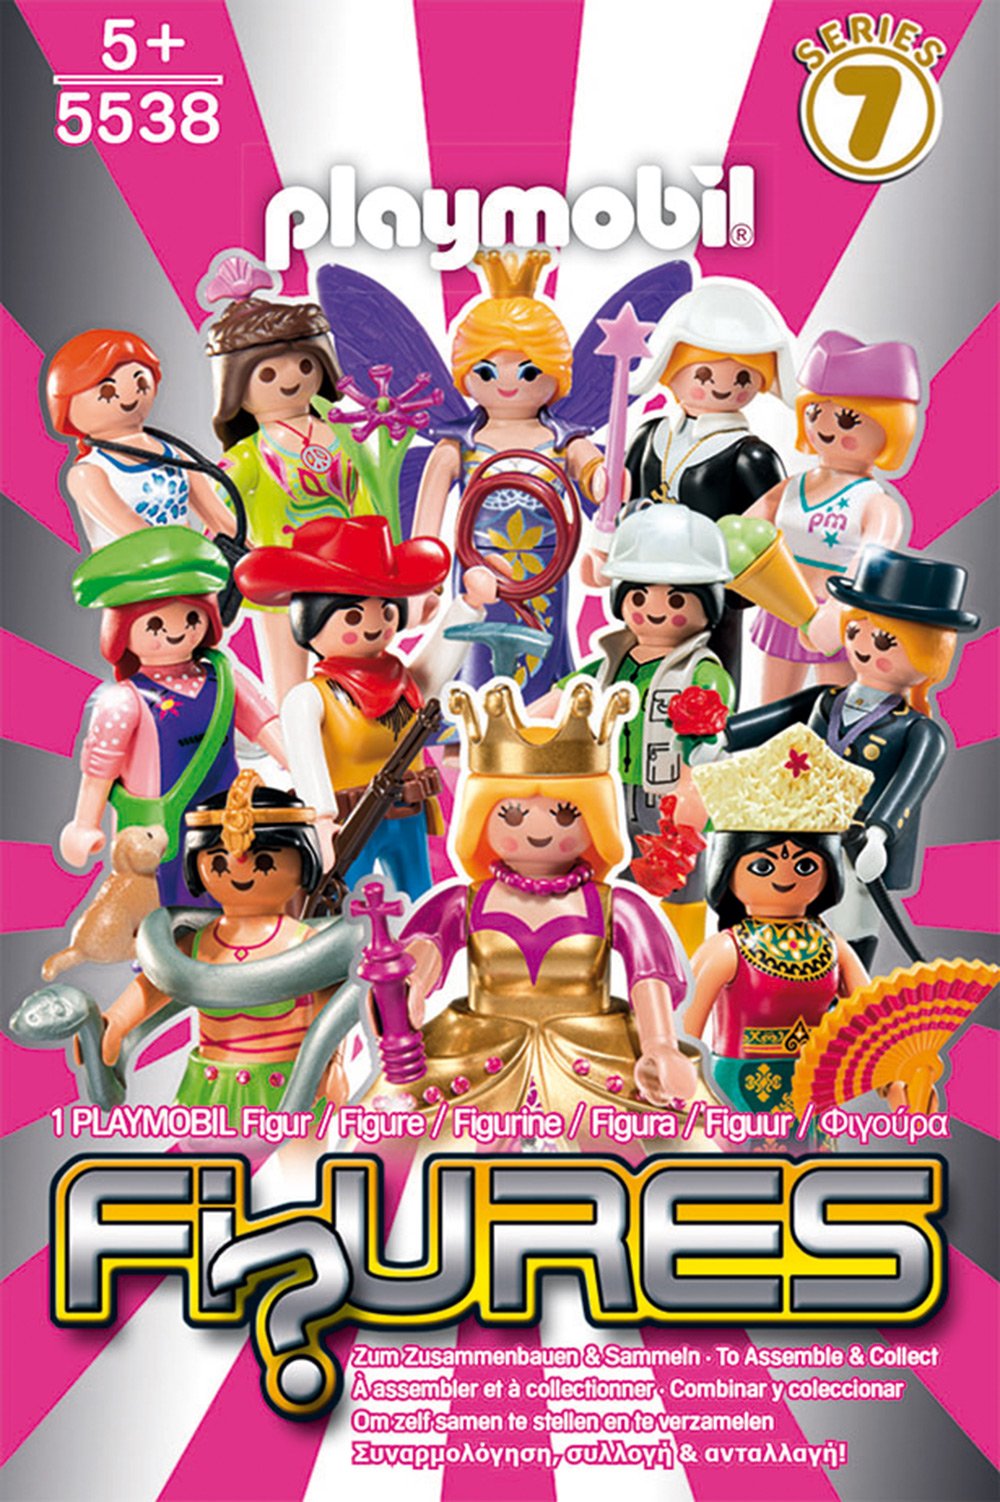 Playmobil Figures Series Girls